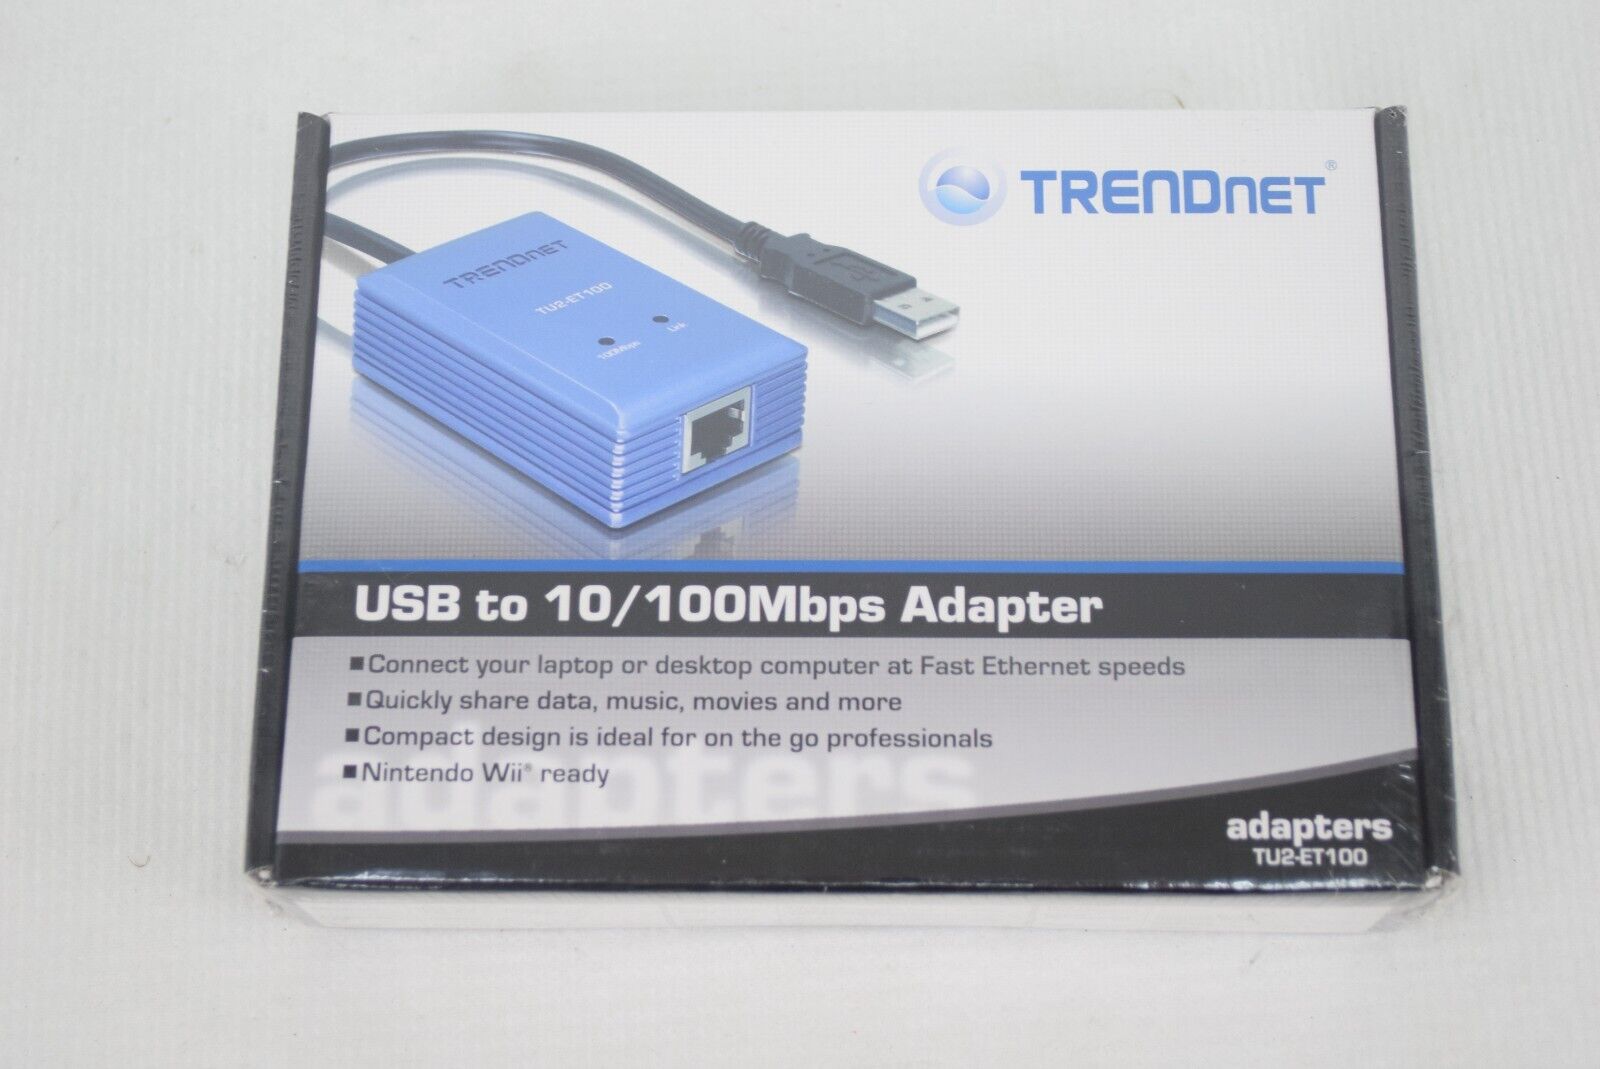 Trendnet TU2-ET100 USB to 10/100 Mbps Adapter